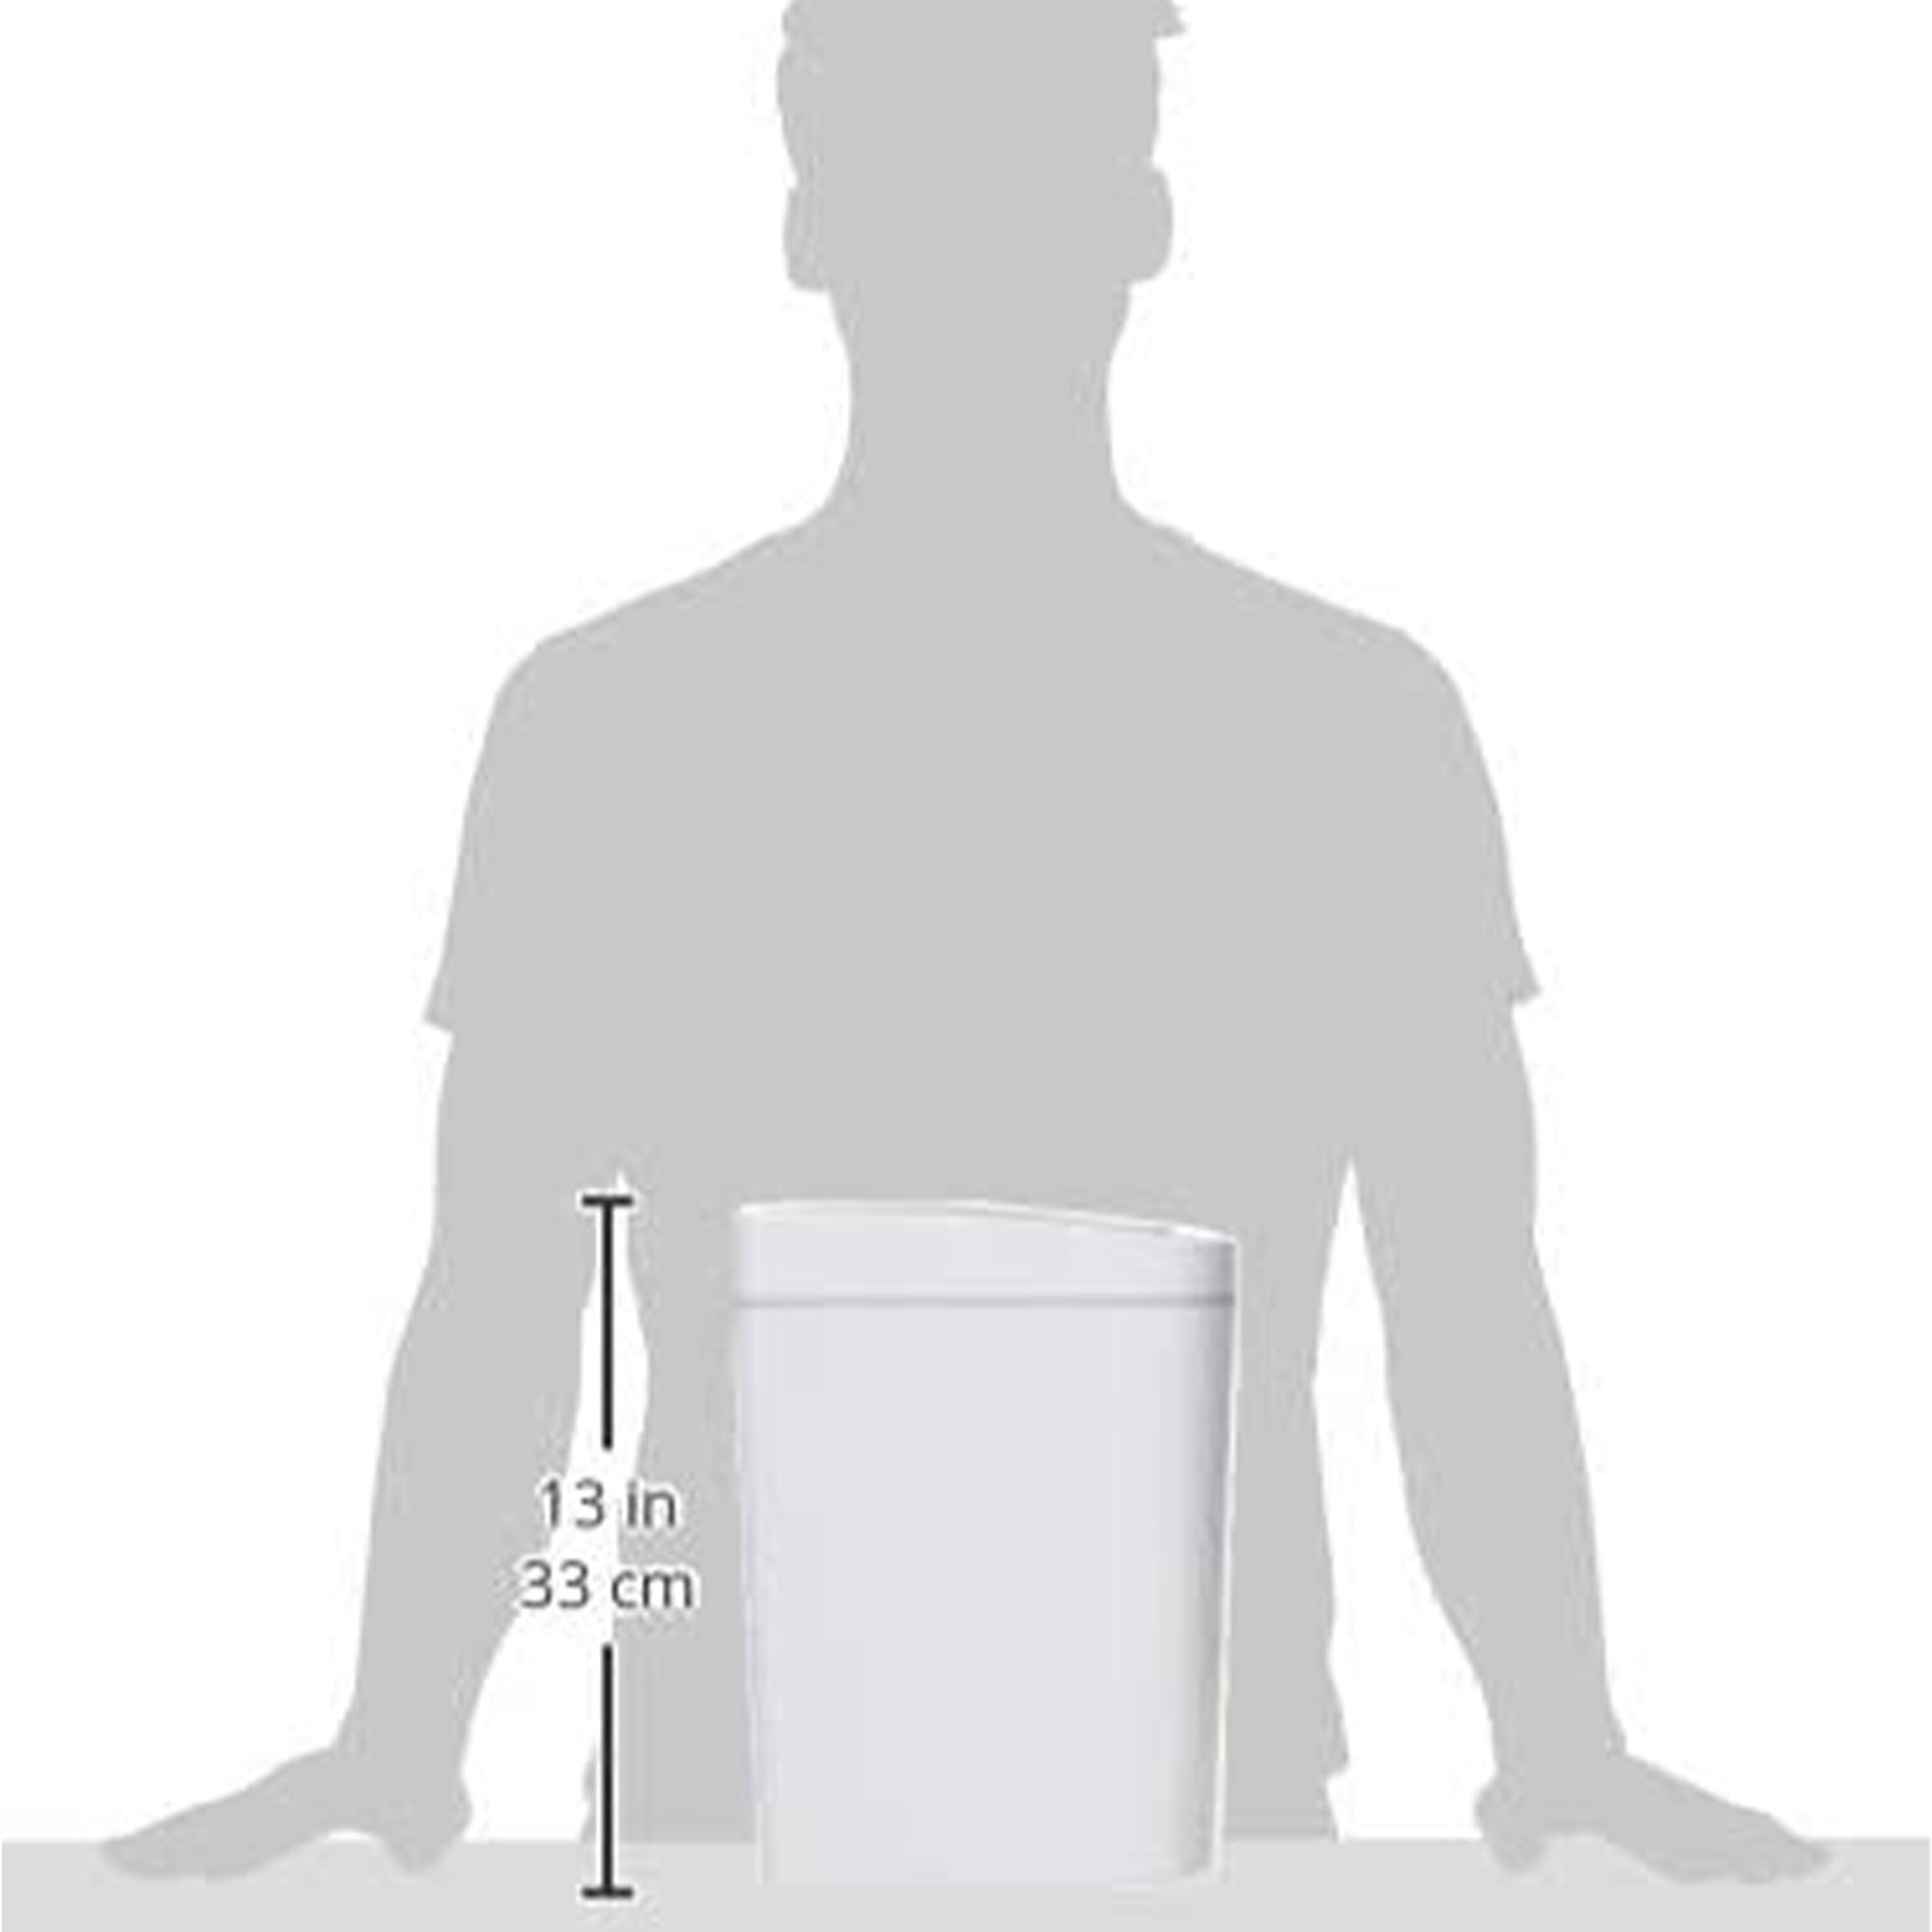 Nine Stars 1.85 Gallon Trash Can, Plastic Motion Sensor Bathroom Trash Can, White, Pack of 1 - image 4 of 9